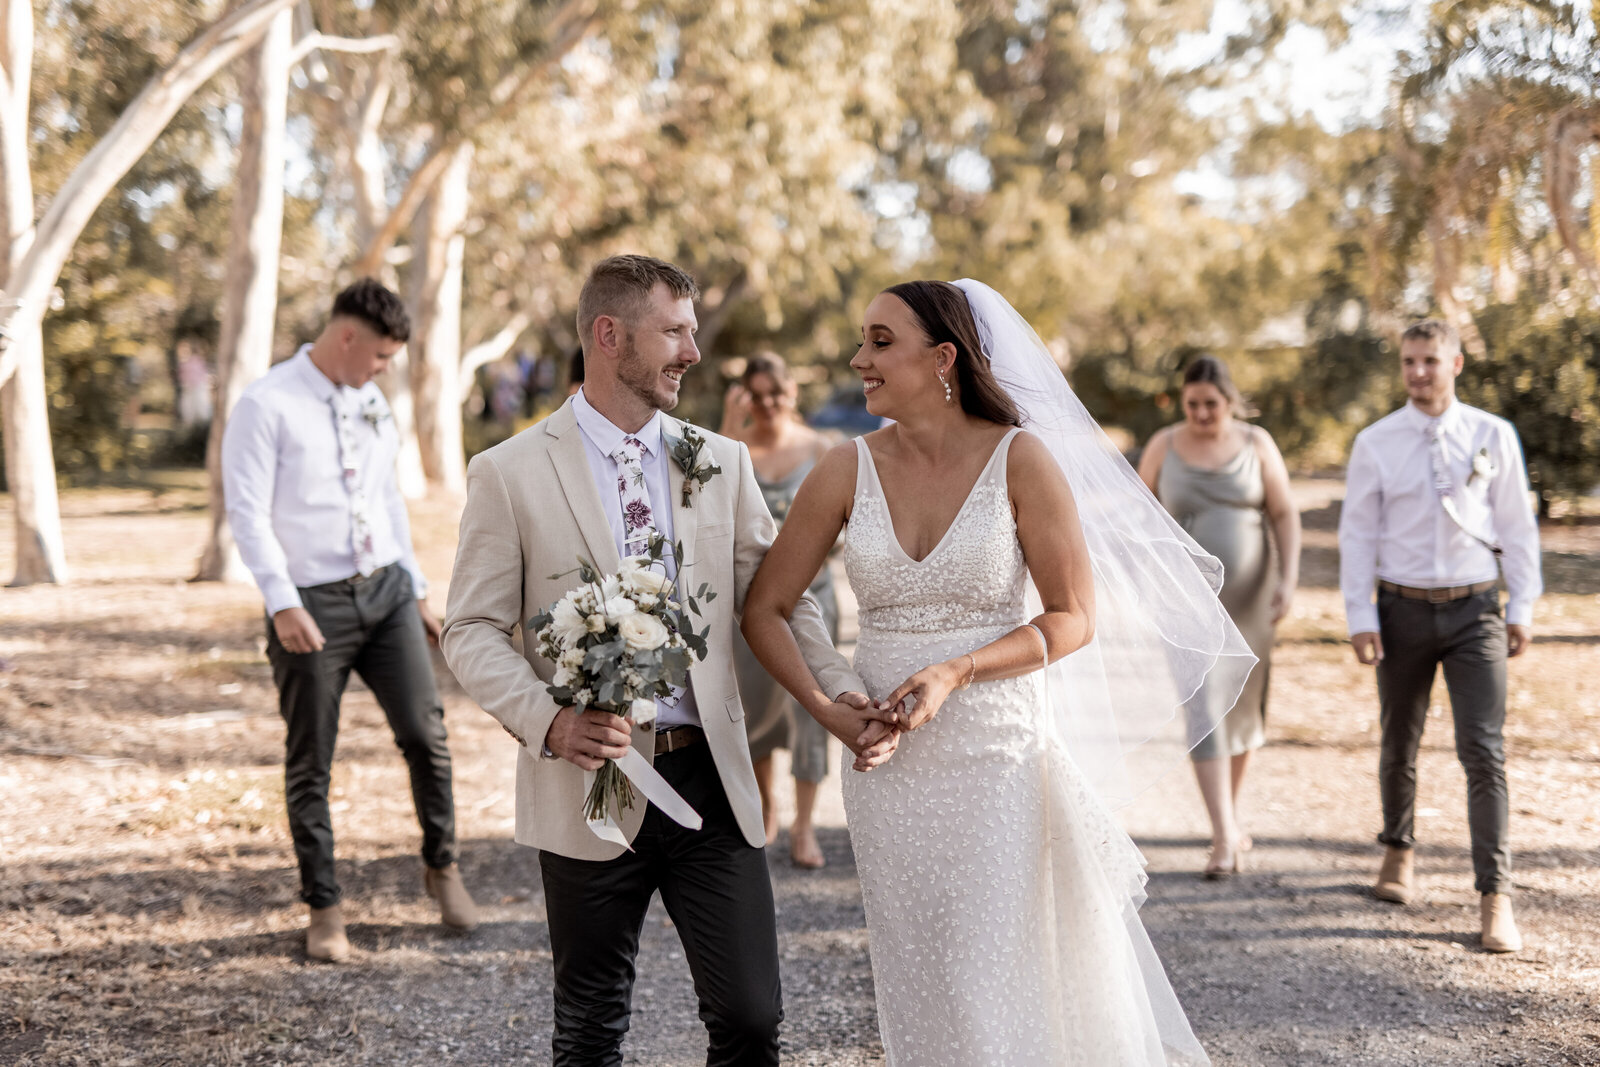 Caitlin-Reece-Rexvil-Photography-Adelaide-Wedding-Photographer-412